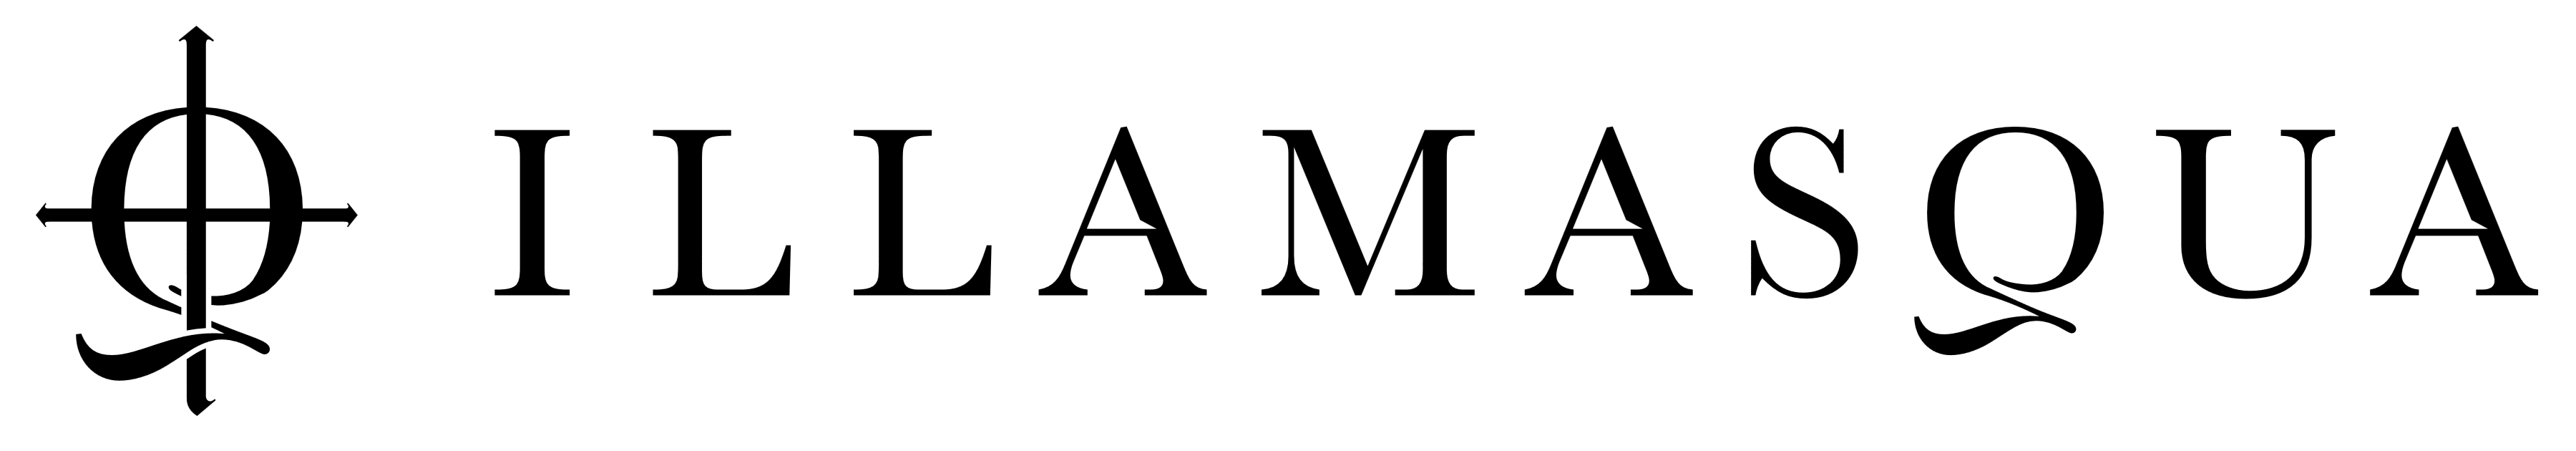 Illamasqua logo, logotype